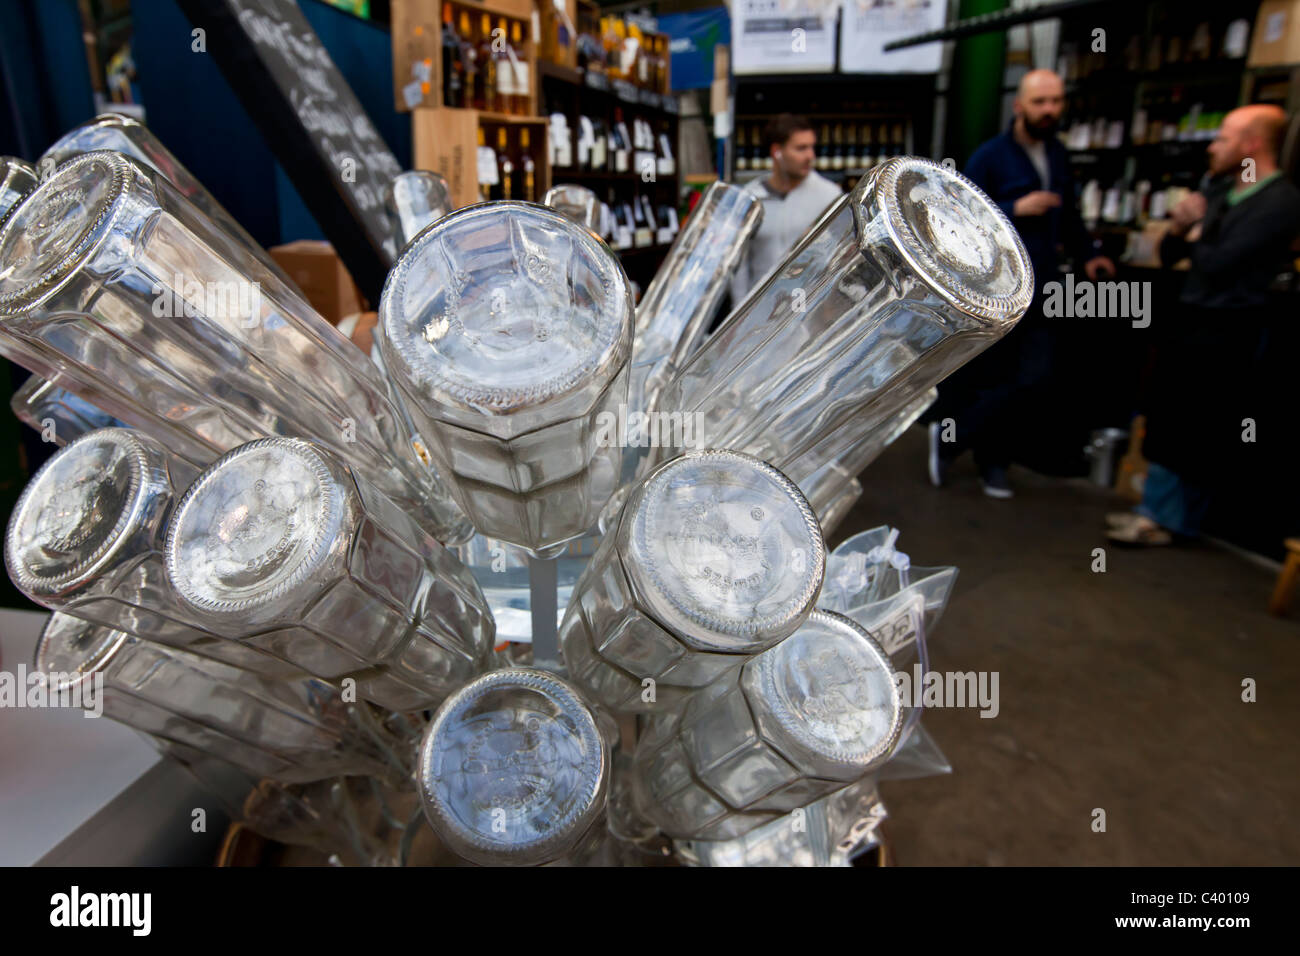 Bottle Display at Borough Market, London Stock Photo